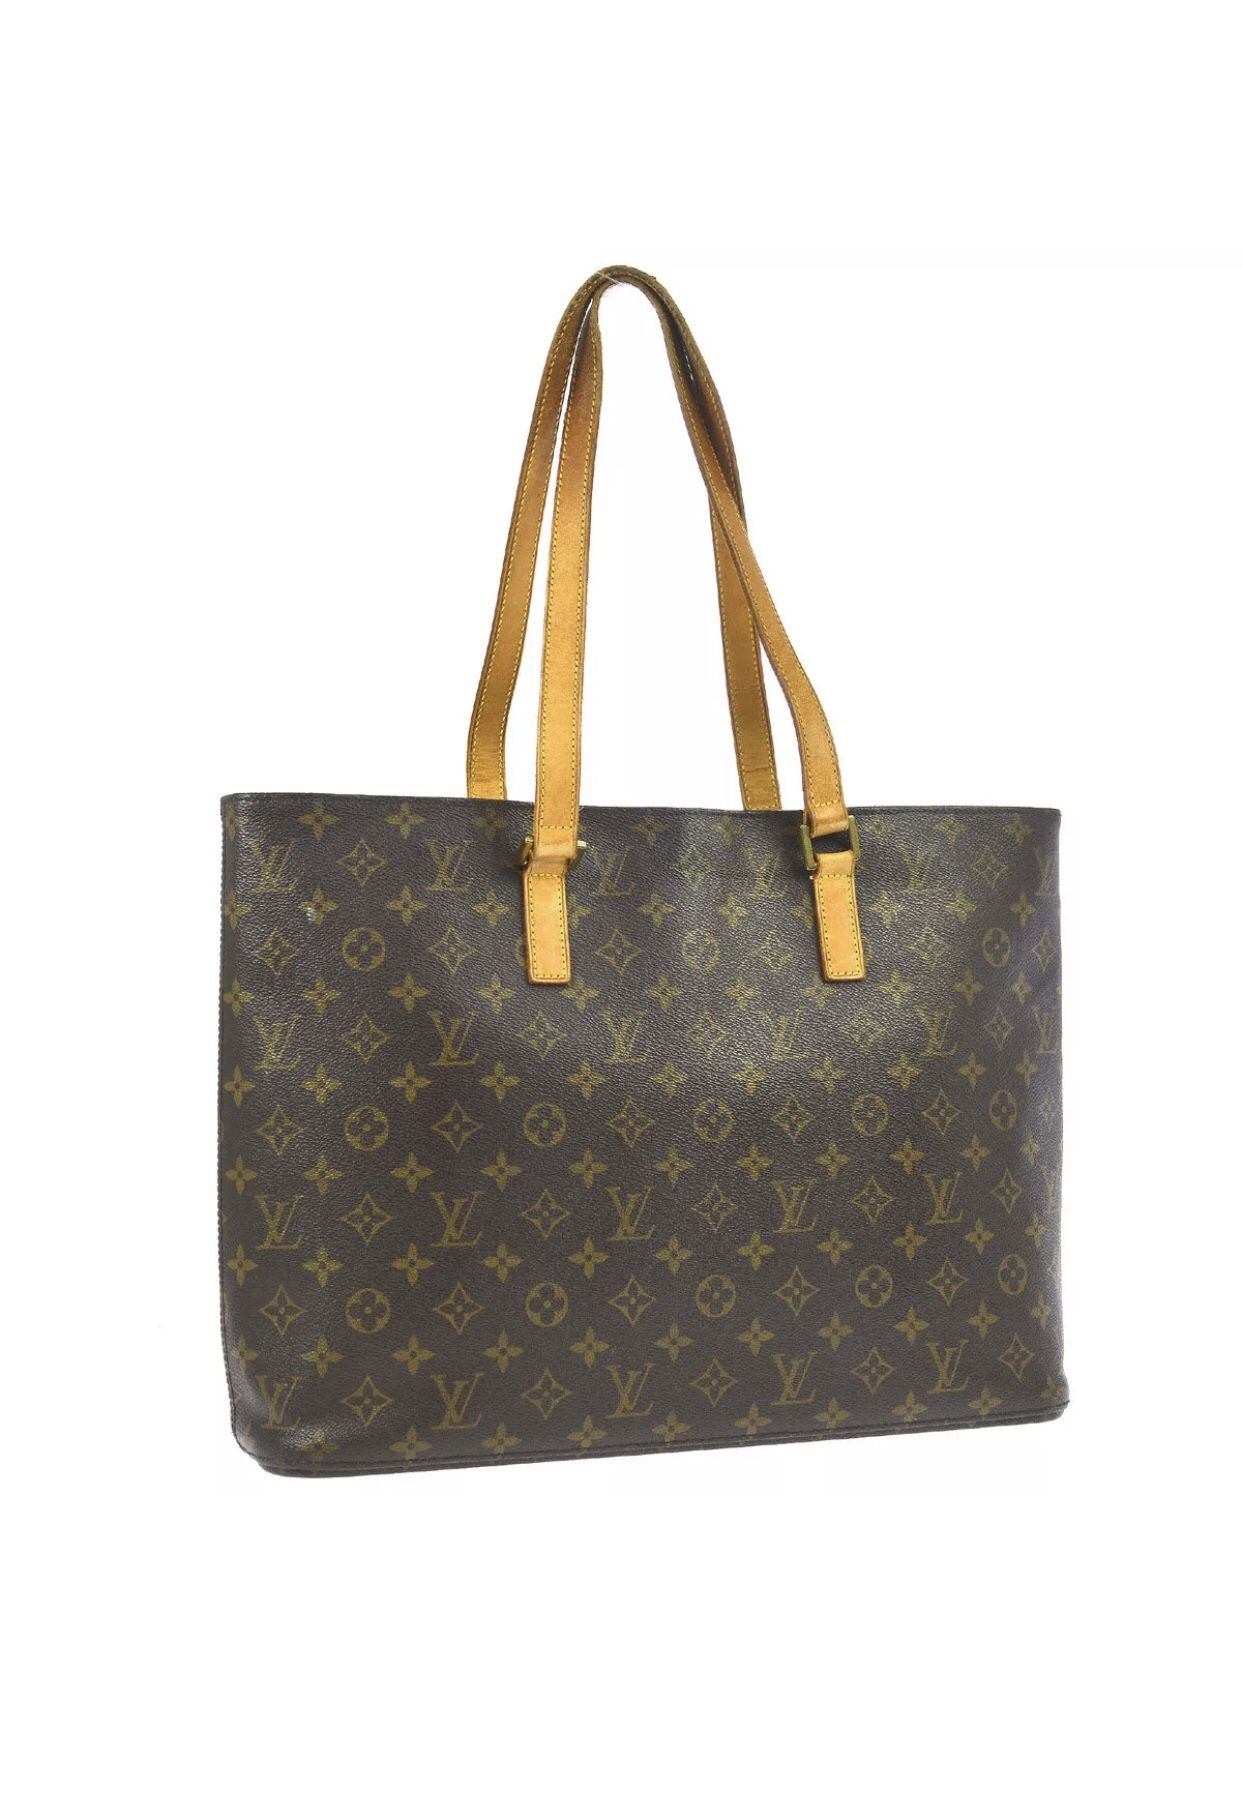 Lovely authentic Louis Vuitton Luco Handbag